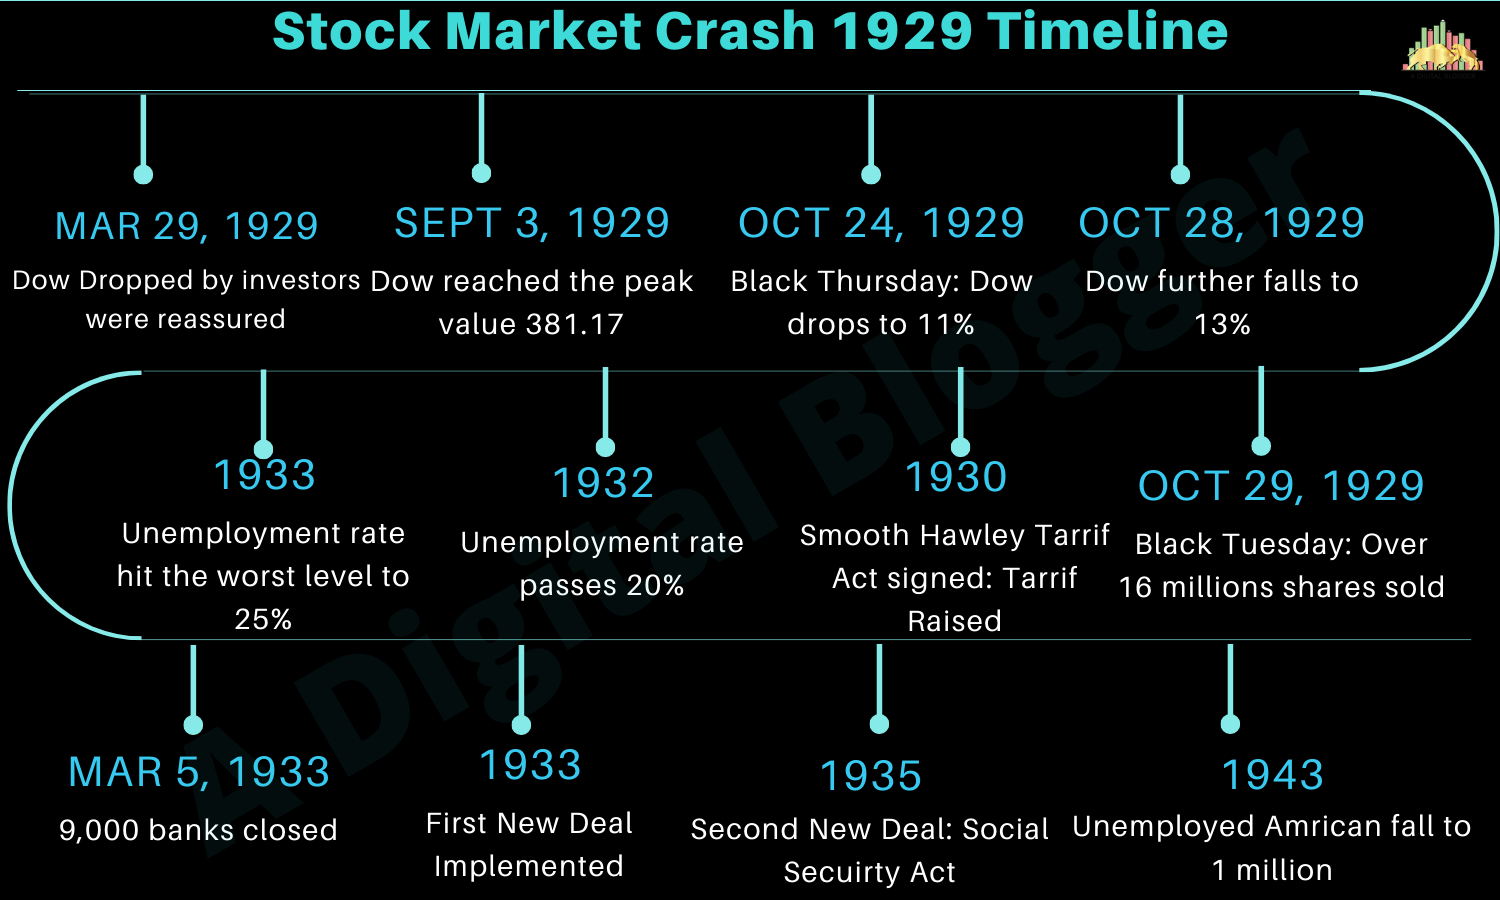 stock market crash 1929